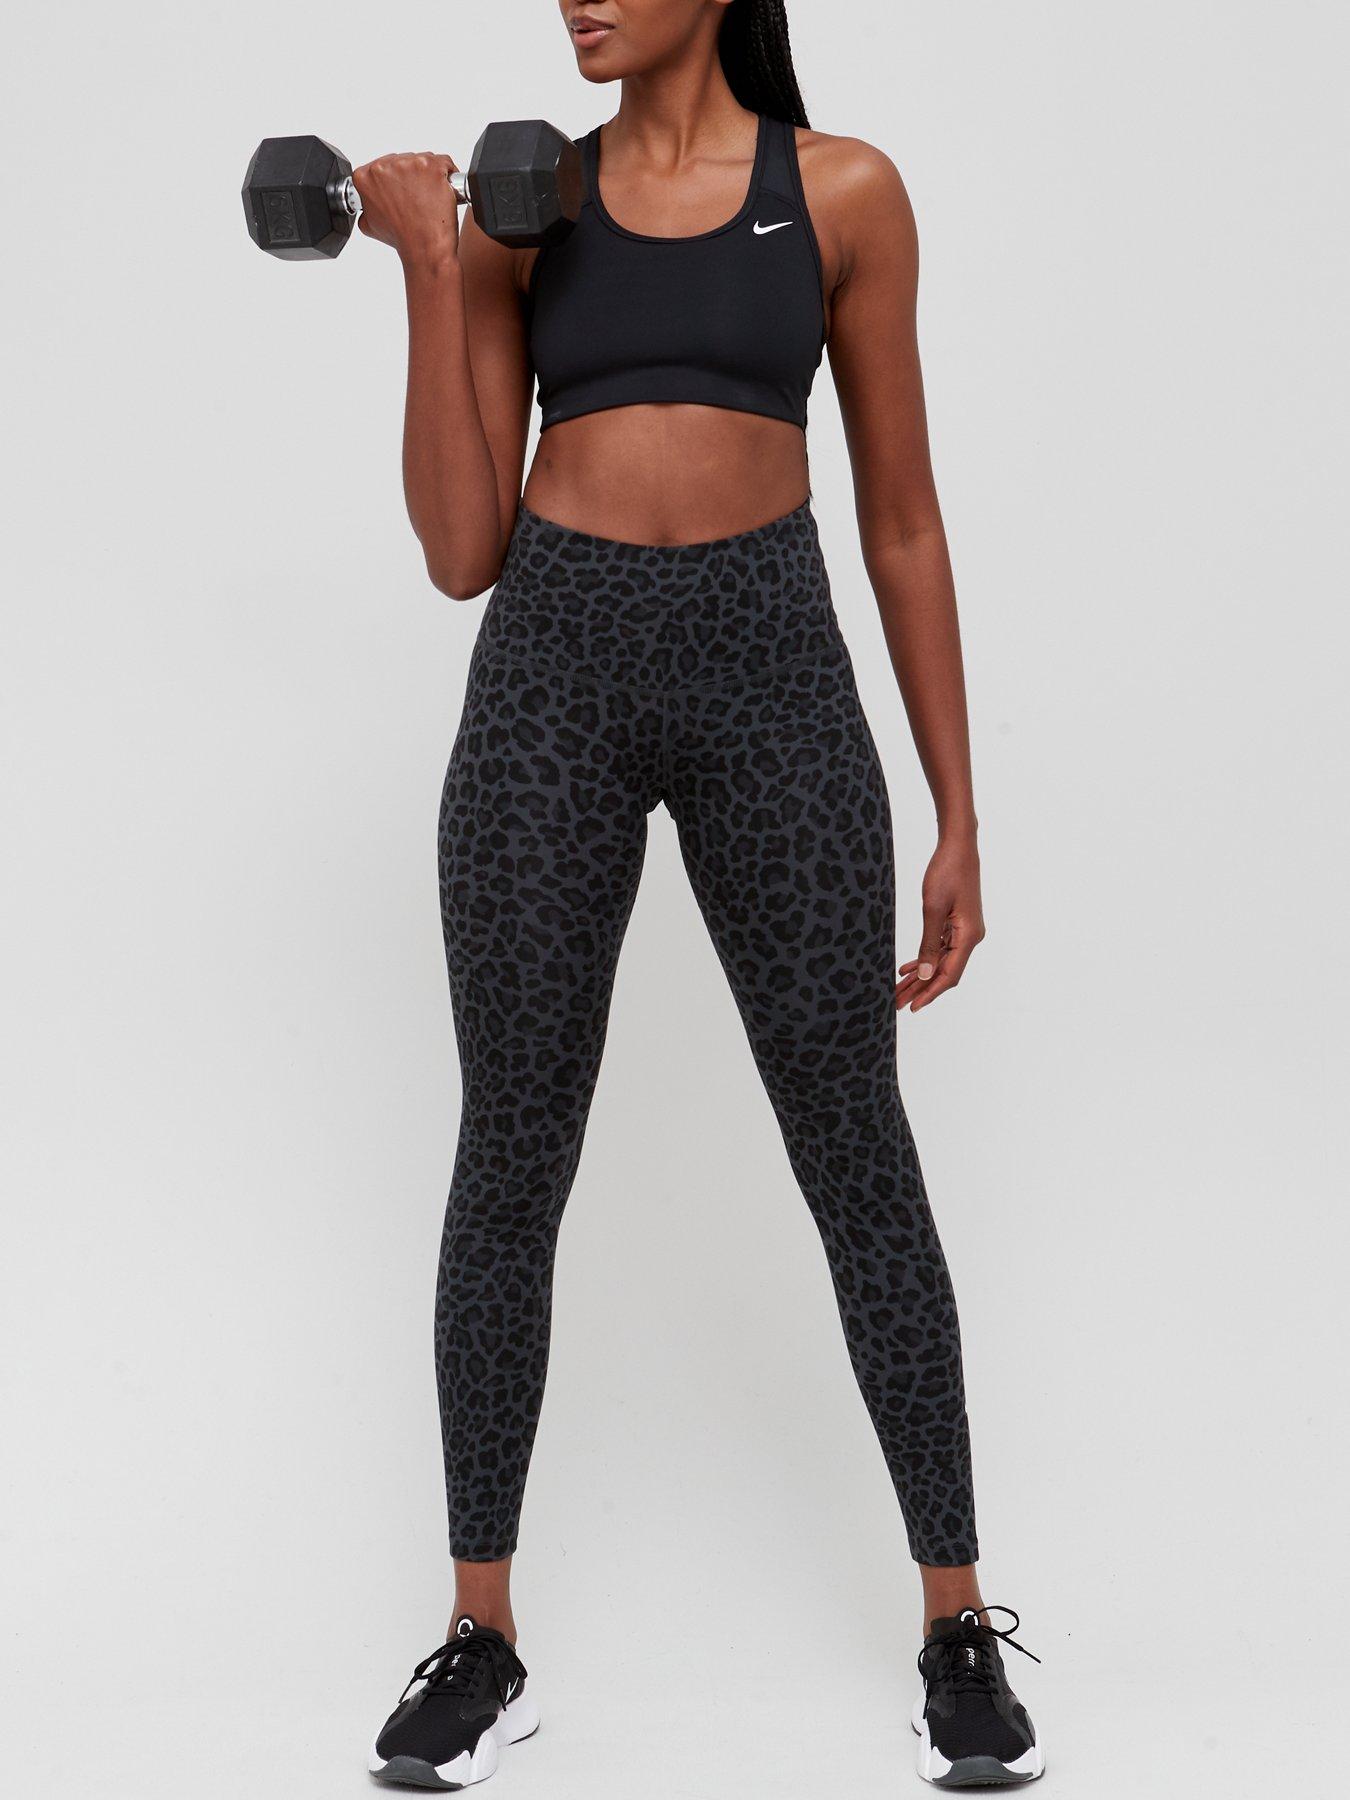 Nike Womens Leg-A-See Leopard Print Leggings CT6101-754 Limited